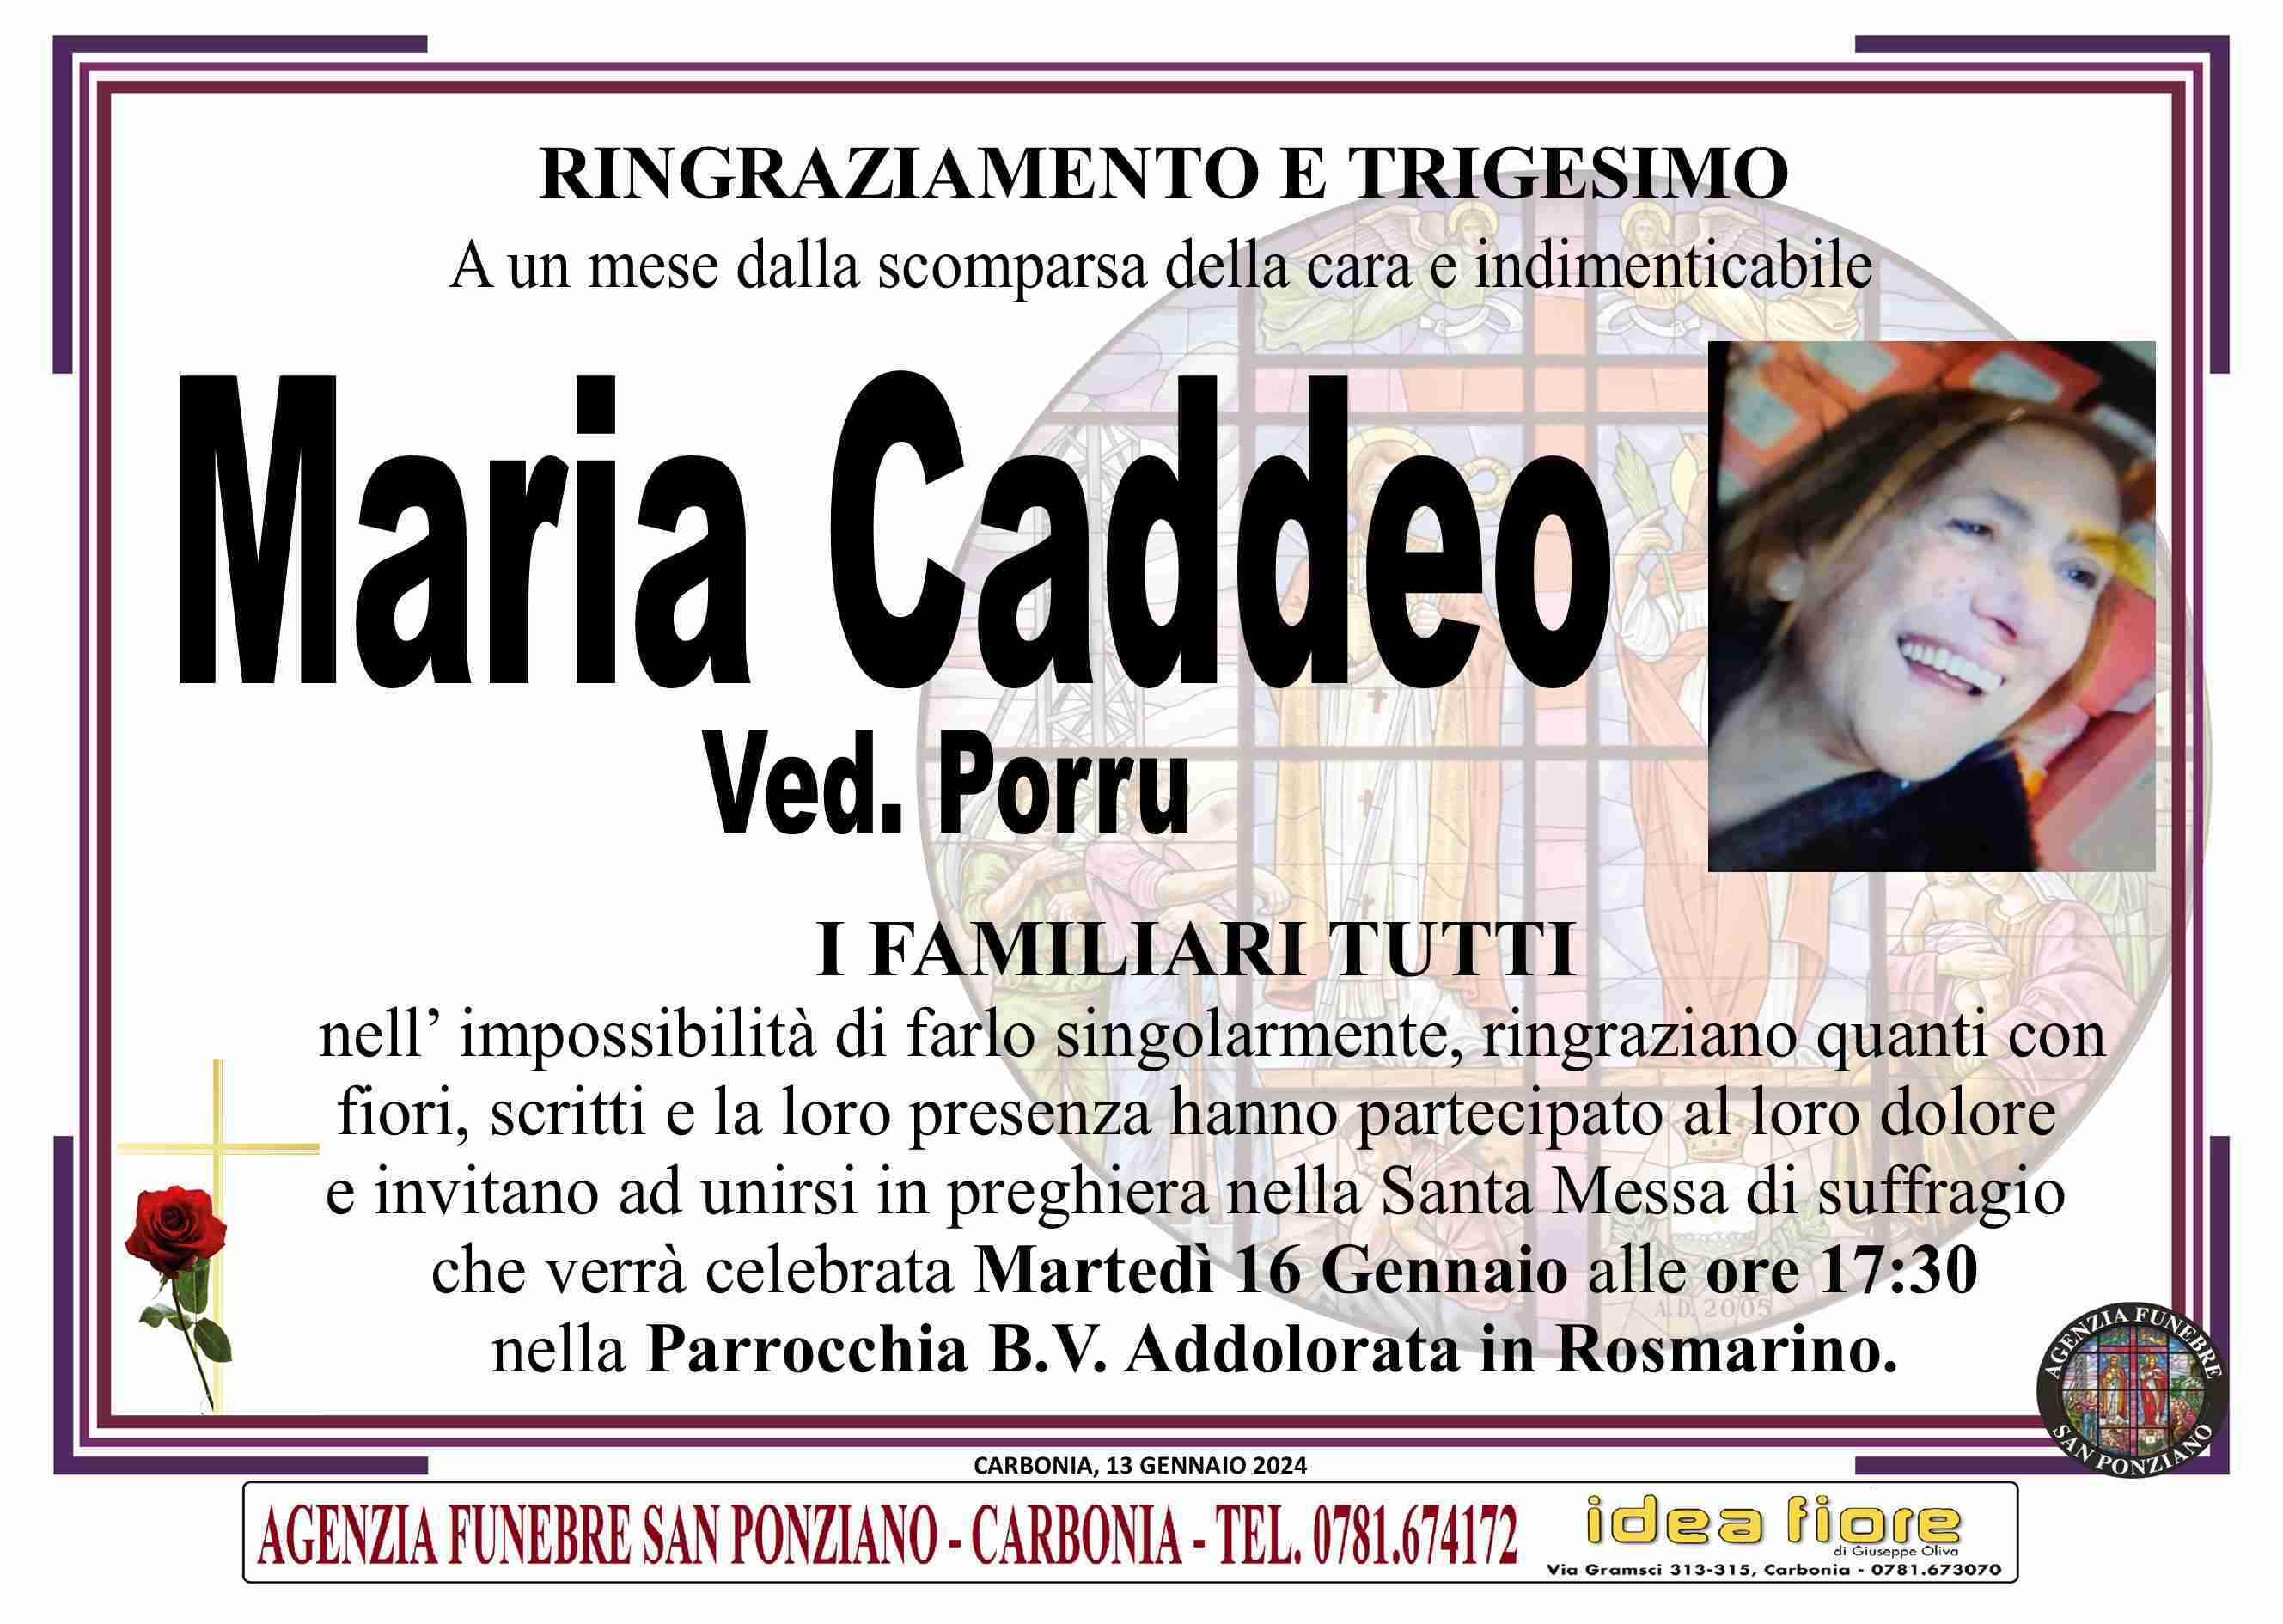 Maria Caddeo